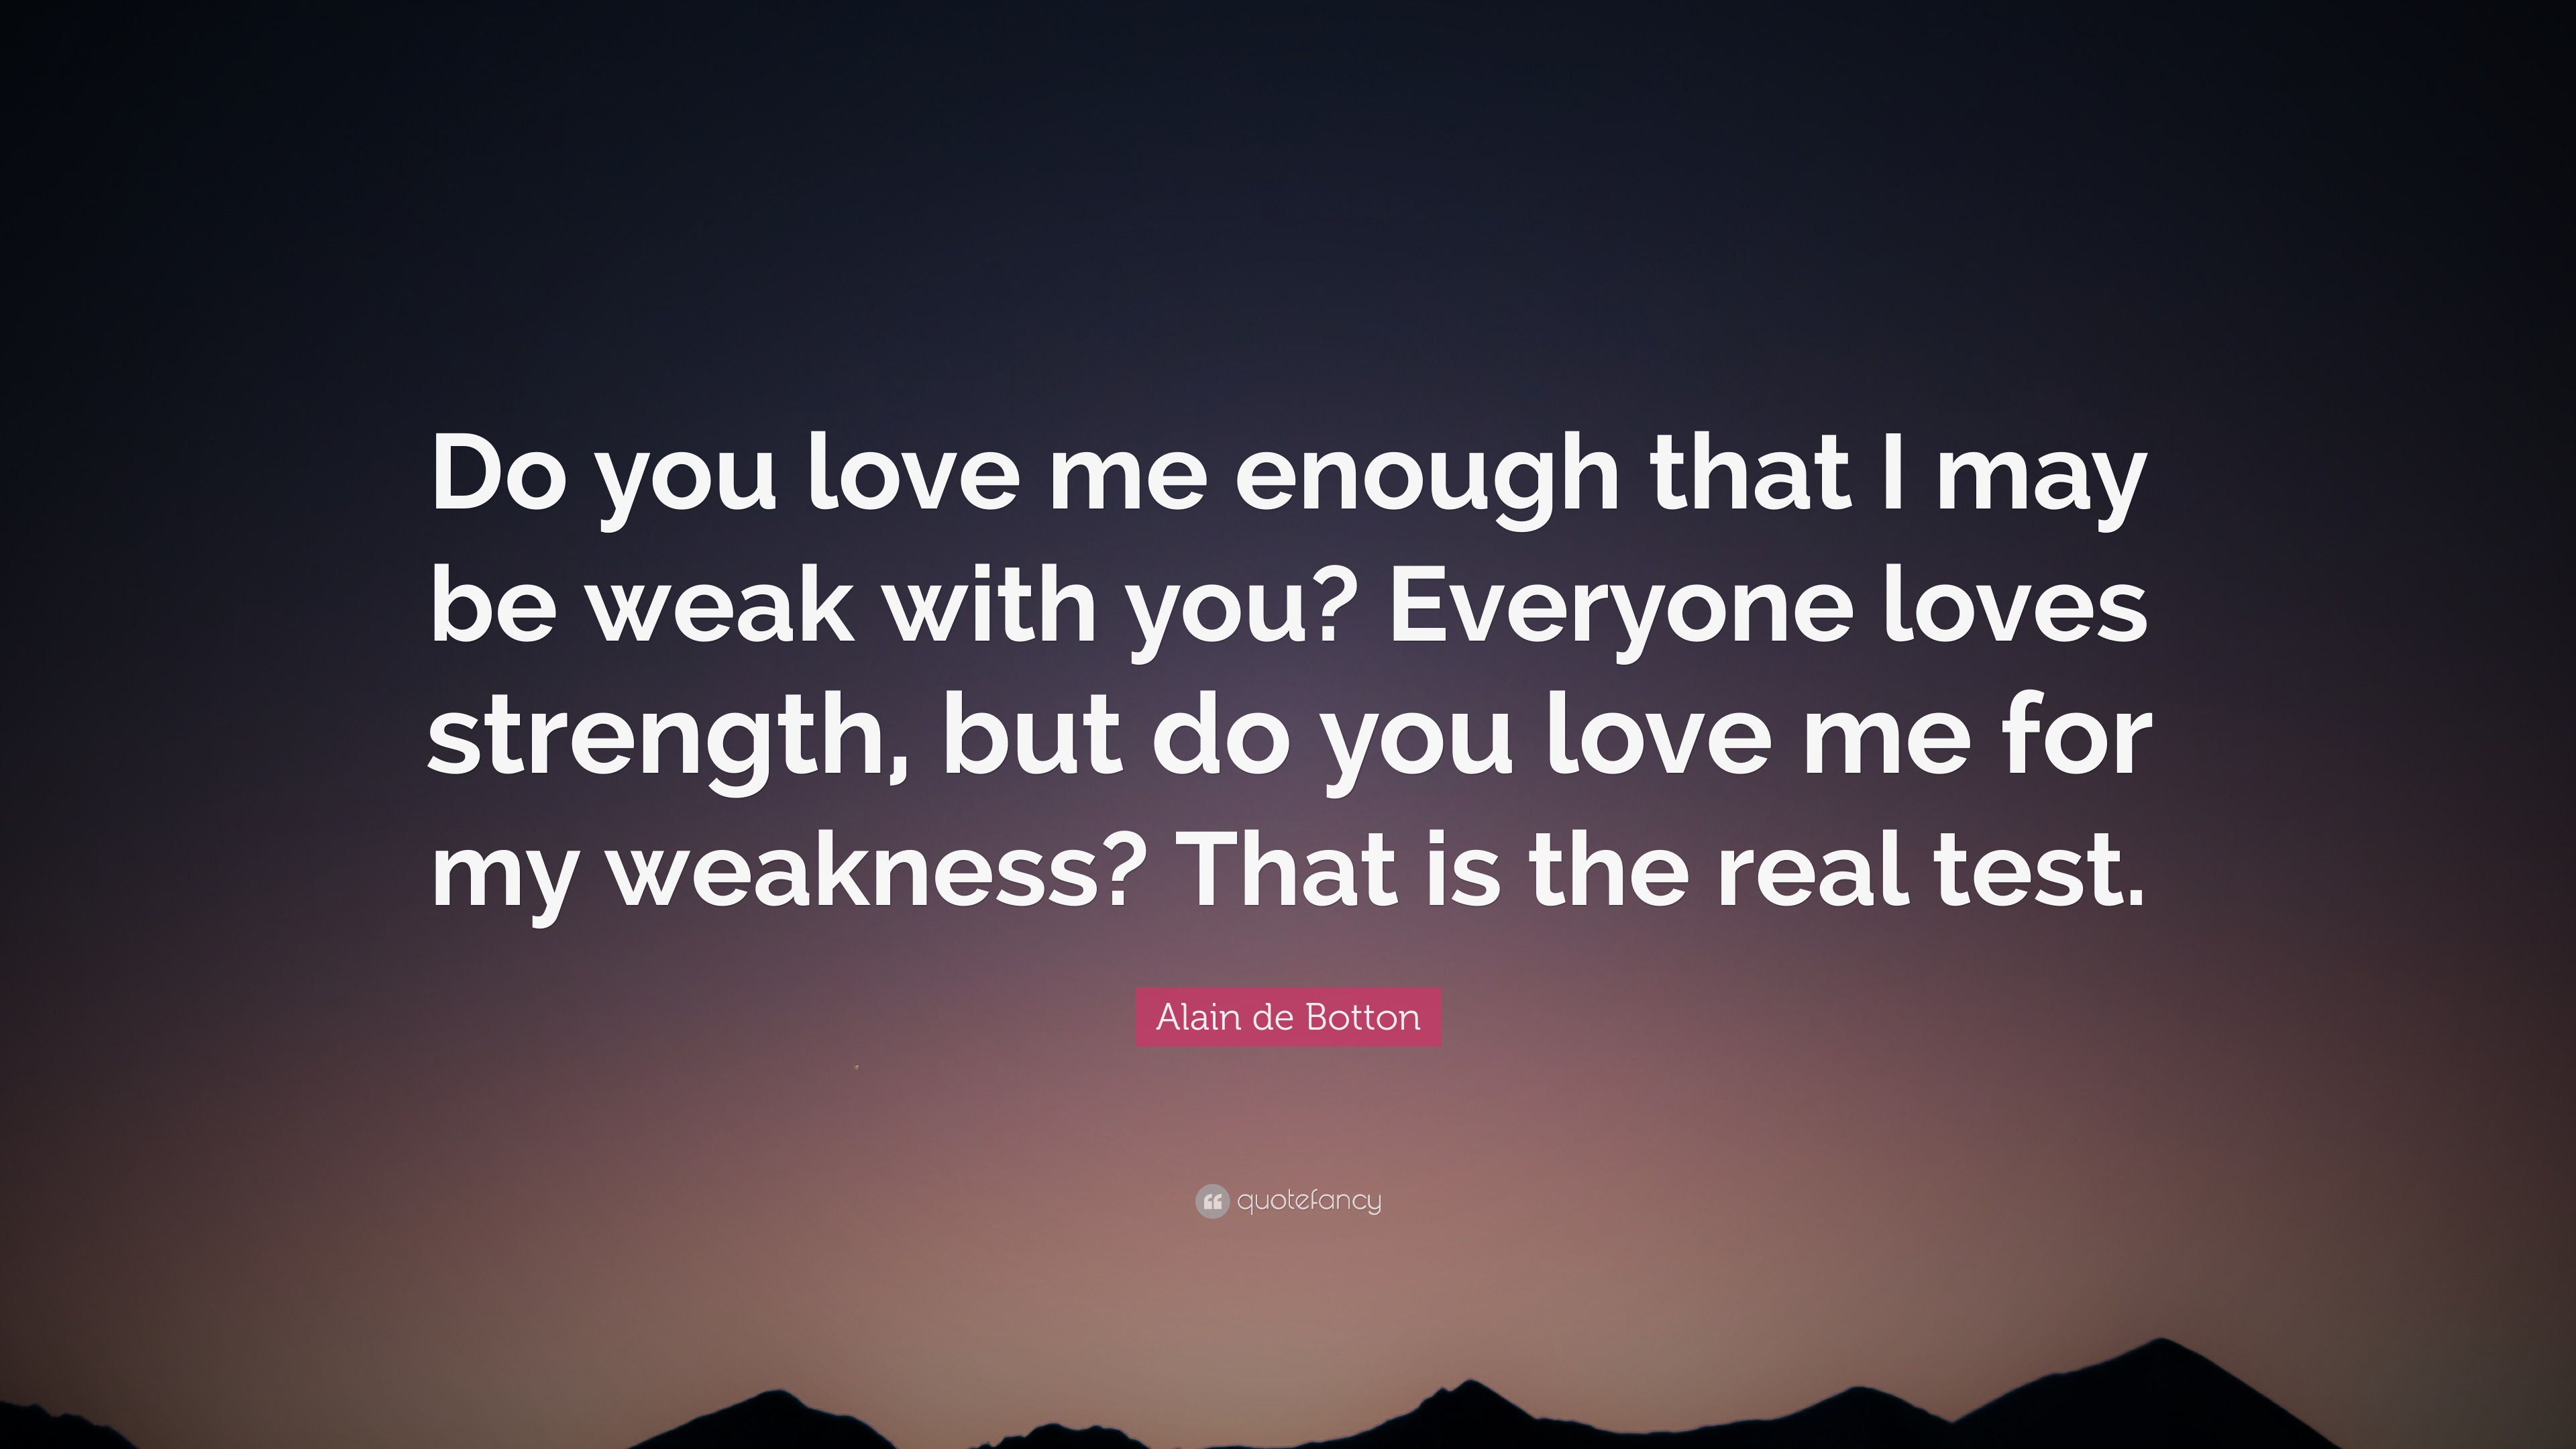 Alain de Botton Quote “Do you love me enough that I may be weak